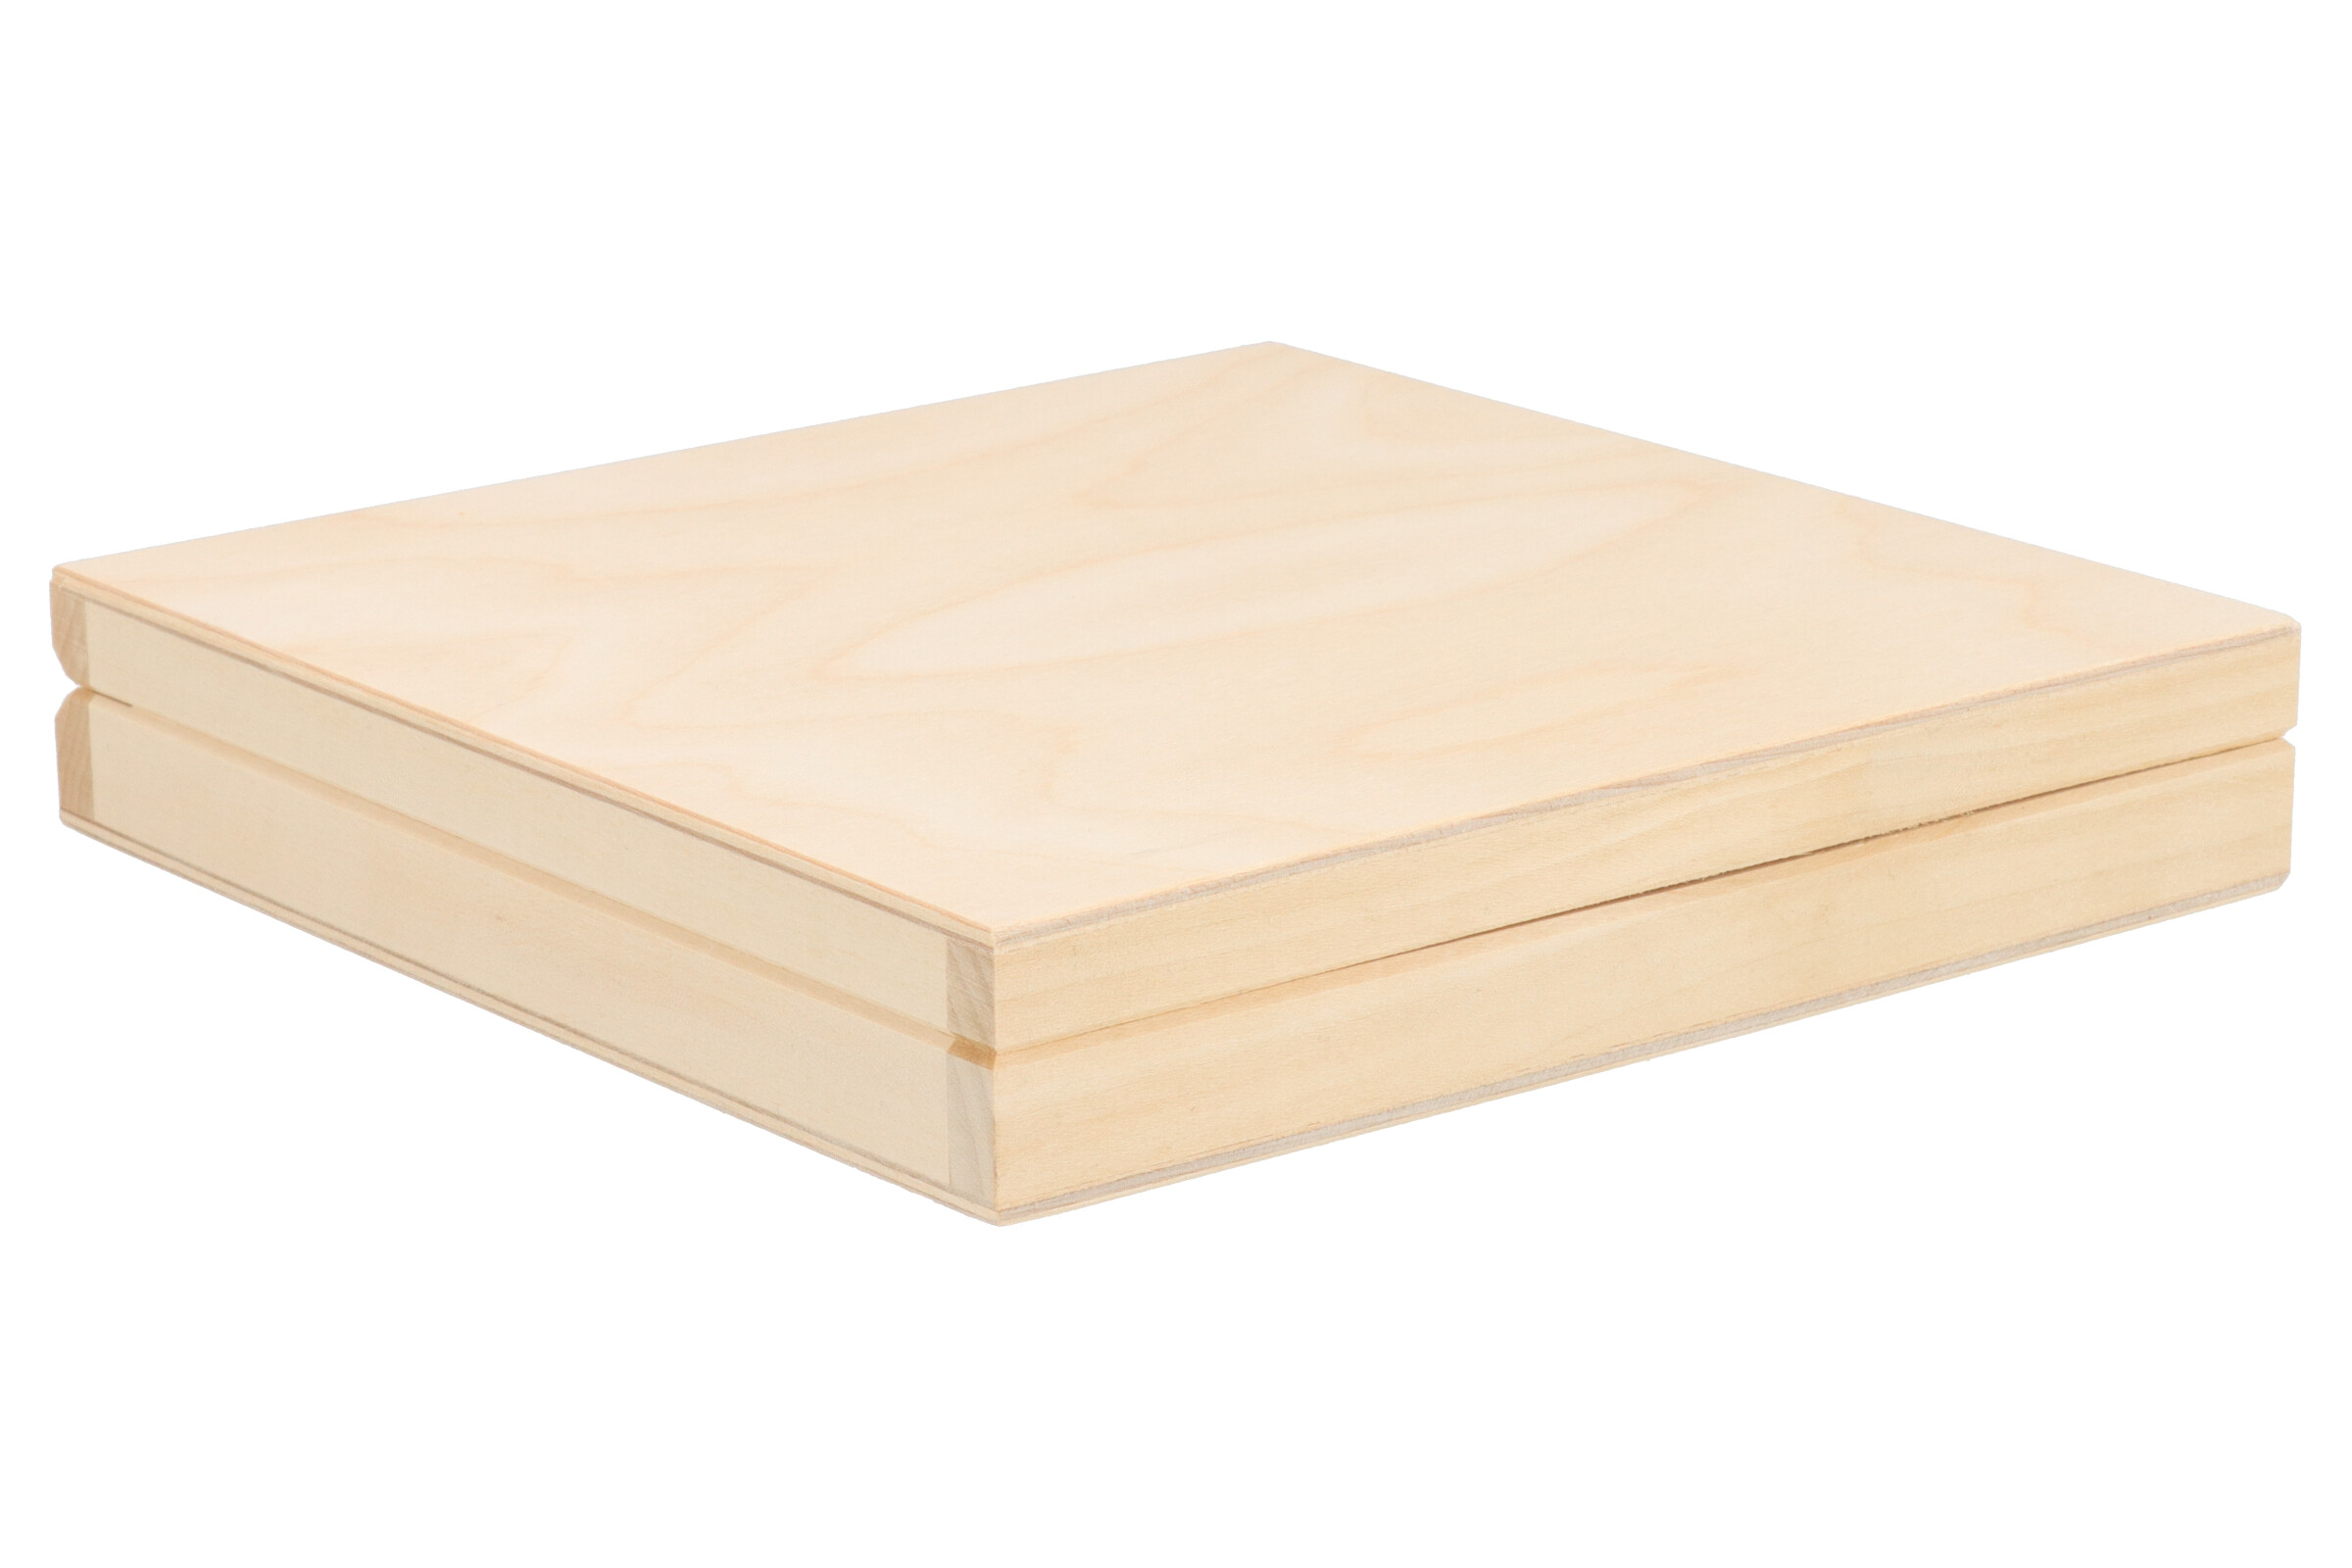 Dřevěná krabička 20 x 20 x 3,5 cm